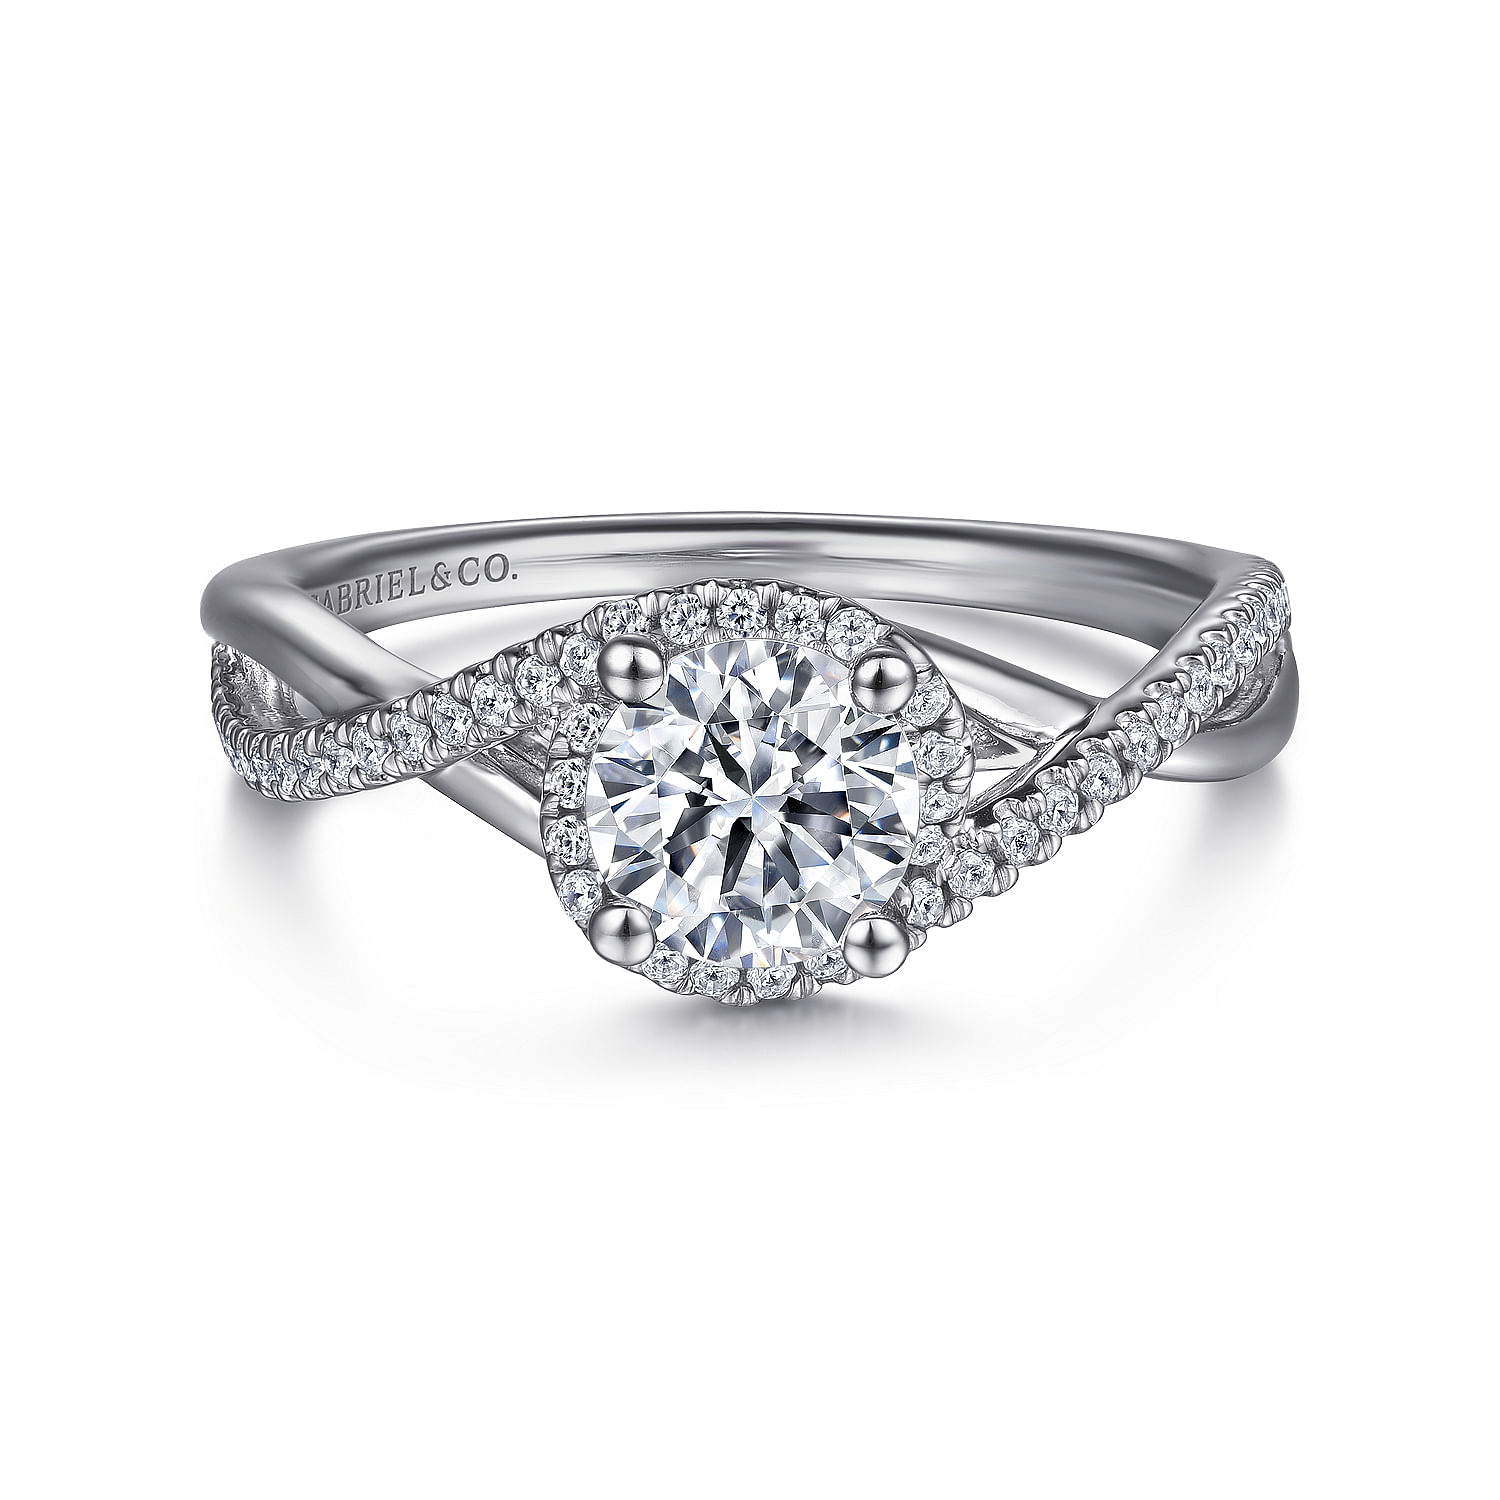 Courtney---14K-White-Gold-Round-Twisted-Diamond-Engagement-Ring1